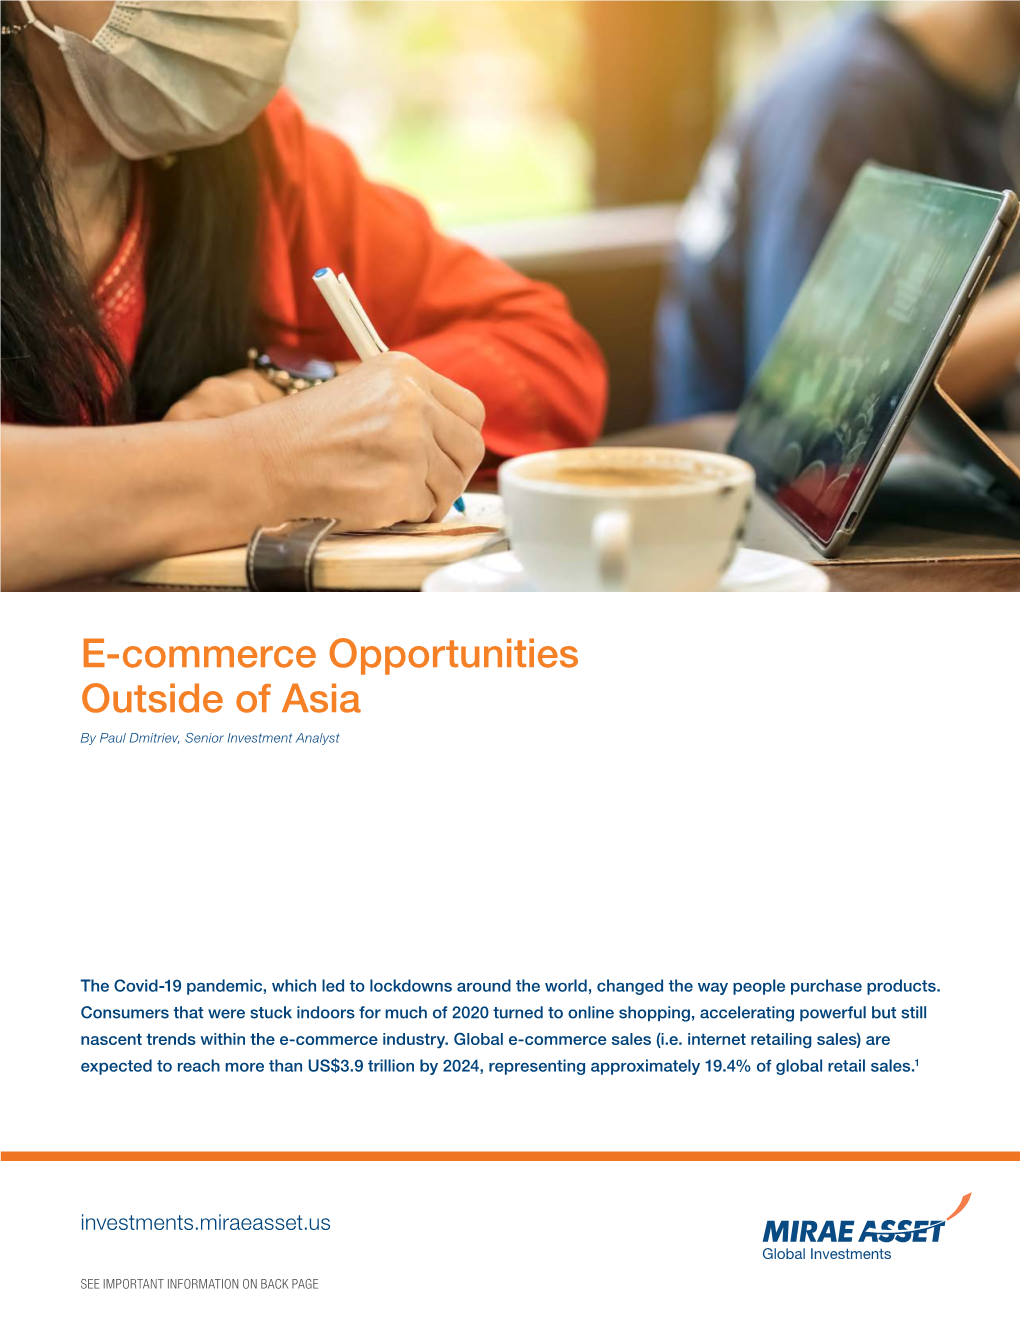 E-Commerce Opportunities Outside of Asia by Paul Dmitriev, Senior Investment Analyst